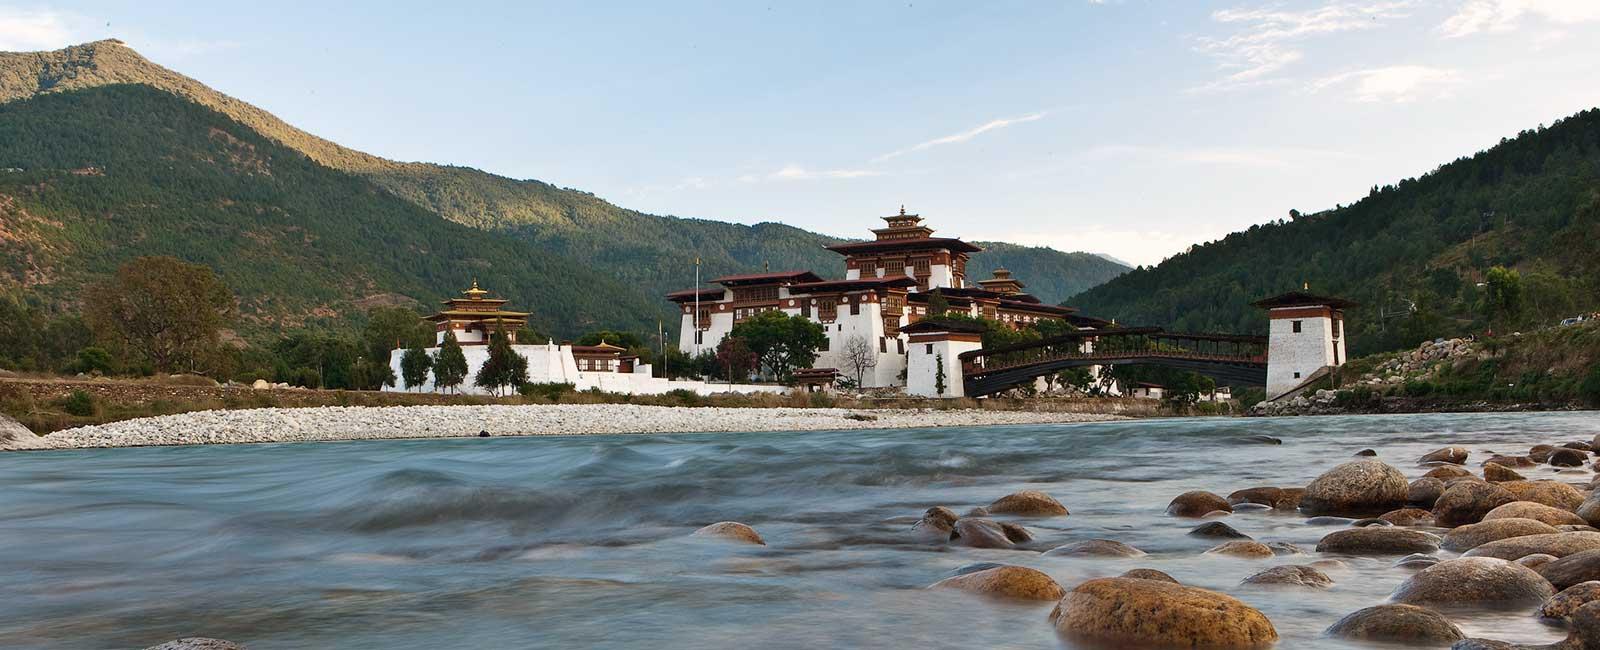 Bhutan The Last Shangrila Tour - 7 Days